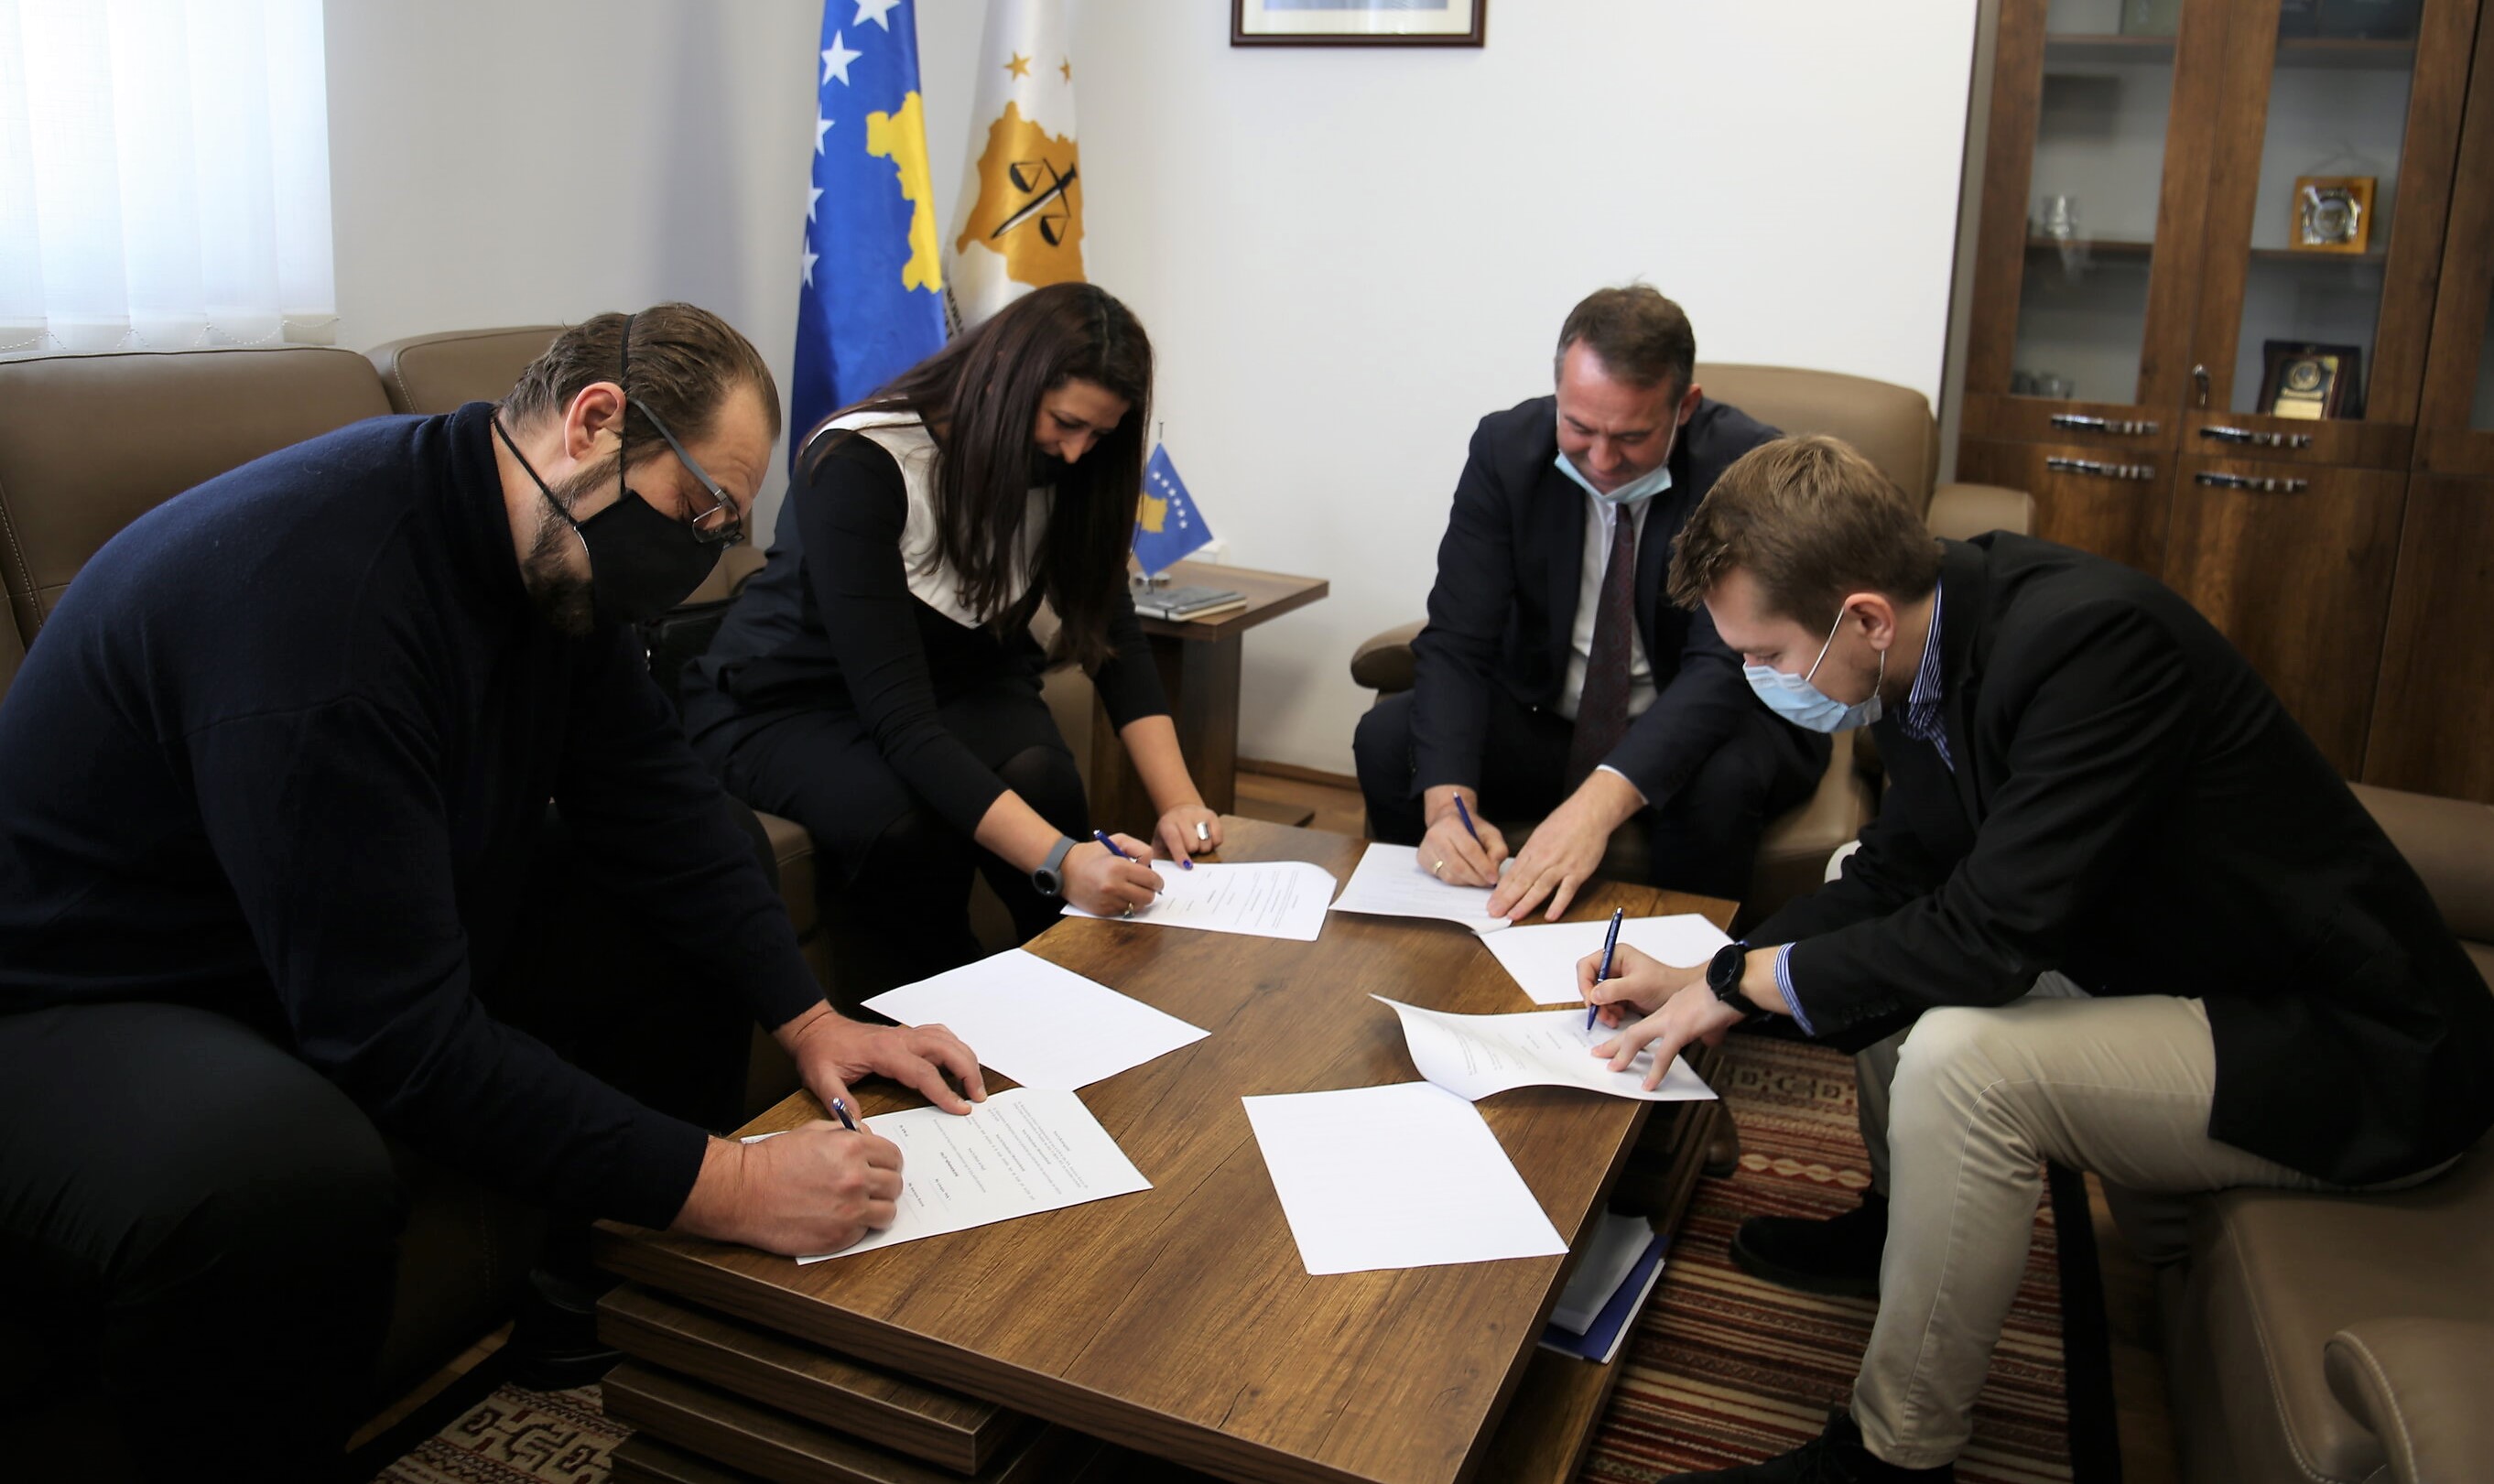 KPC, FOL, Internews Kosova and Debate Center signed a memorandum of understanding